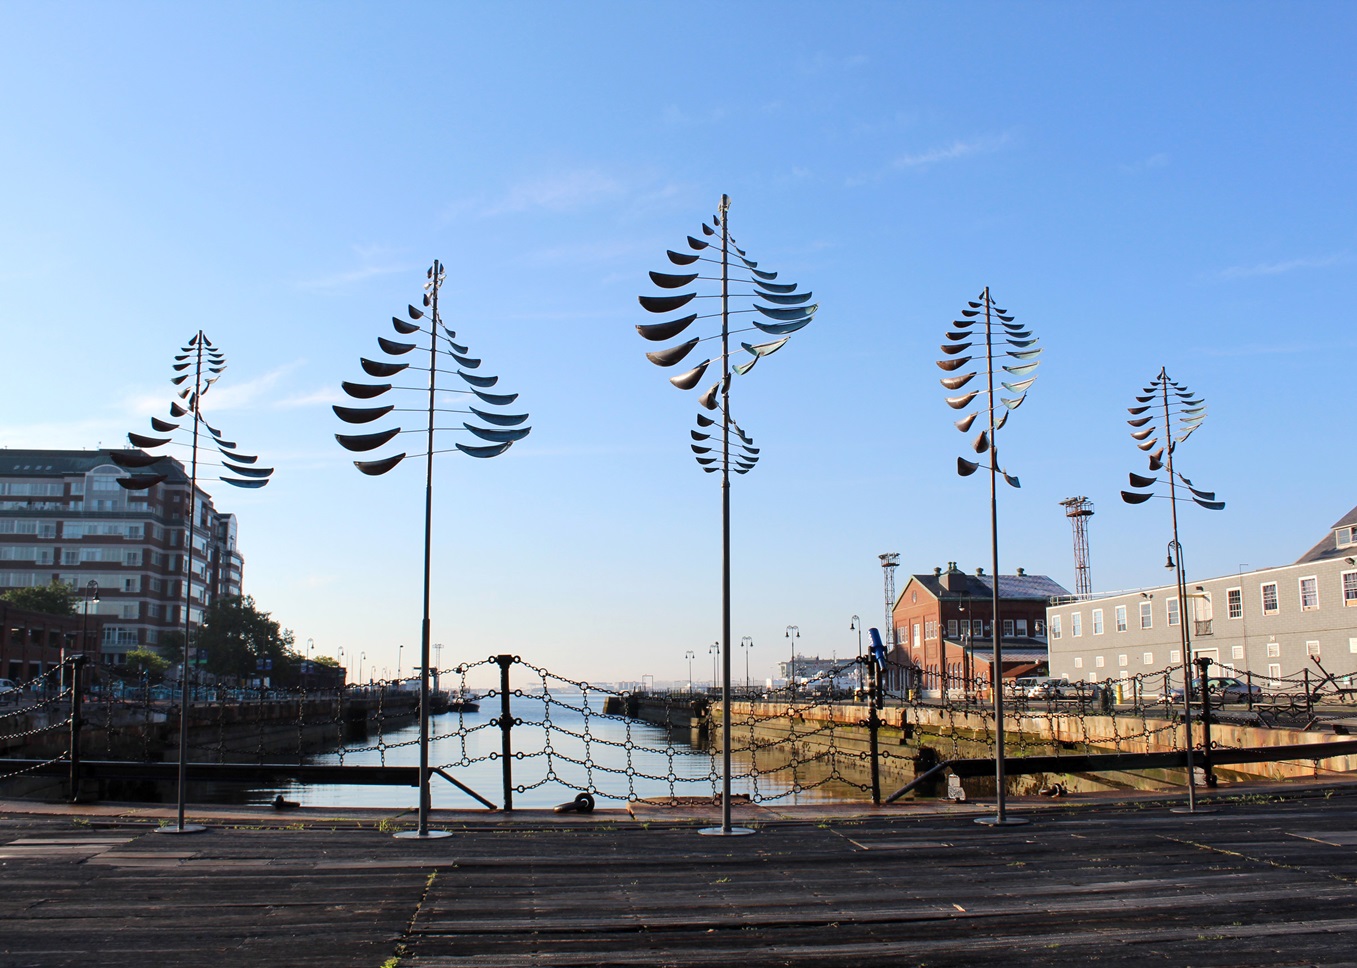 Lyman Whitaker Wind Sculptures at the Charlestown Navy Yard in Boston